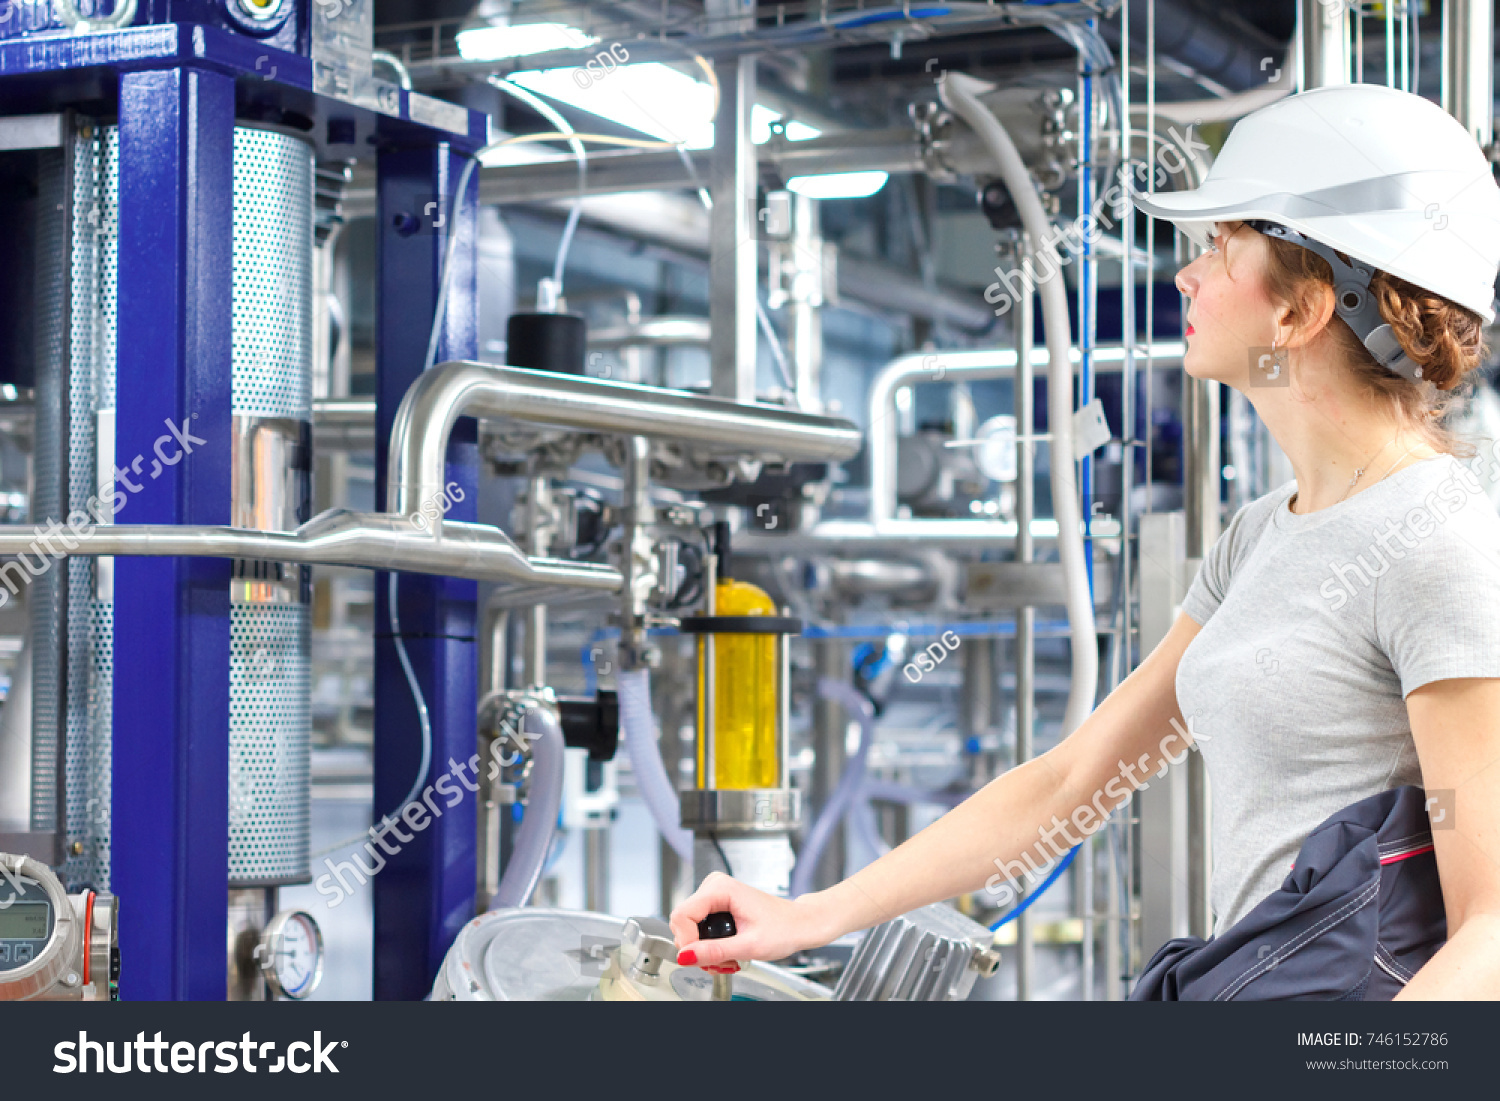 Portrait Of Female Engineering  inspect equipment #746152786